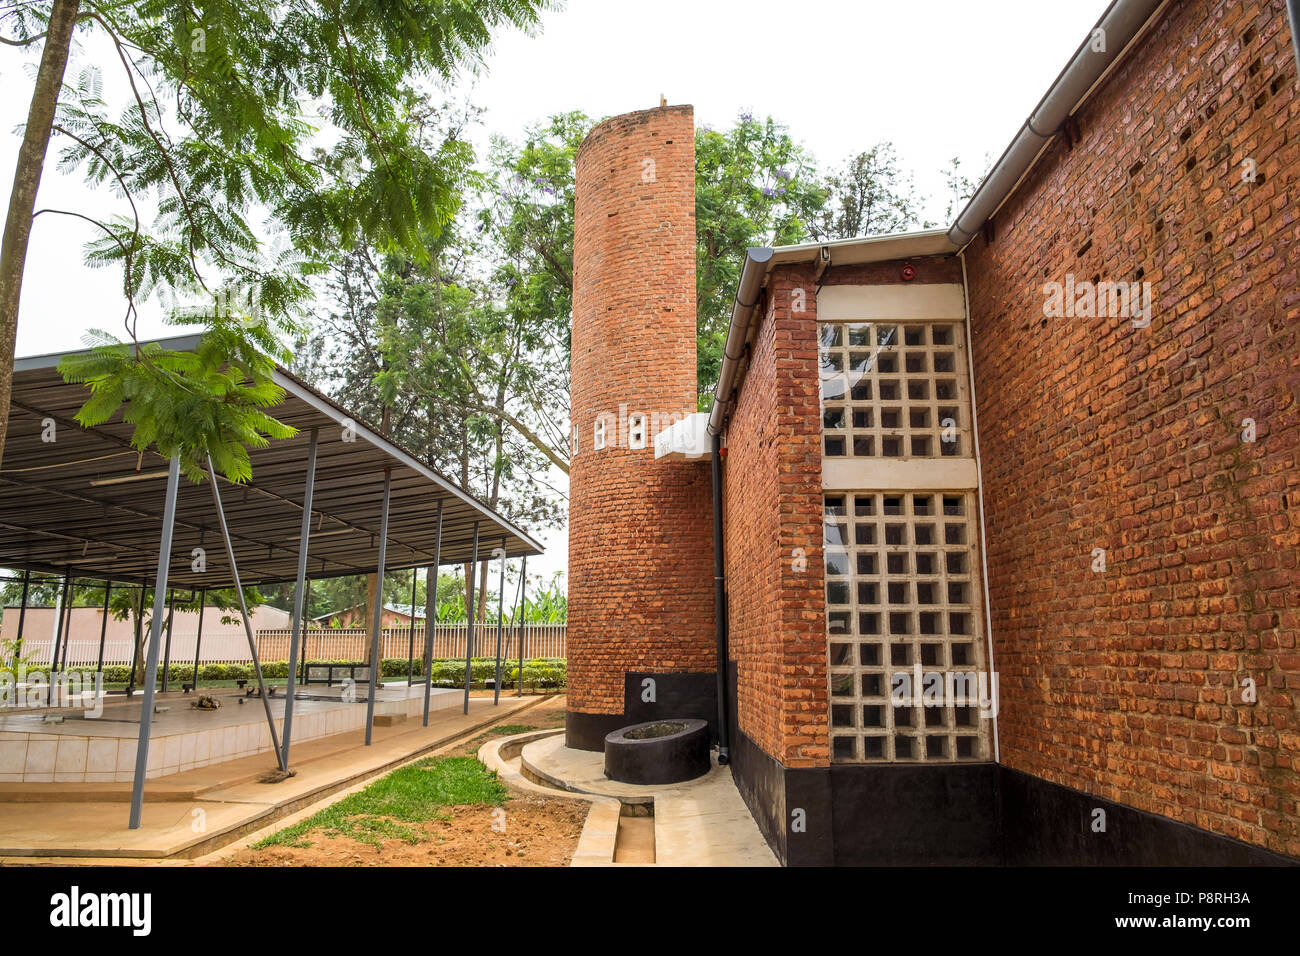 Rwanda,Nyamata,Genocide Memorial Stock Photo